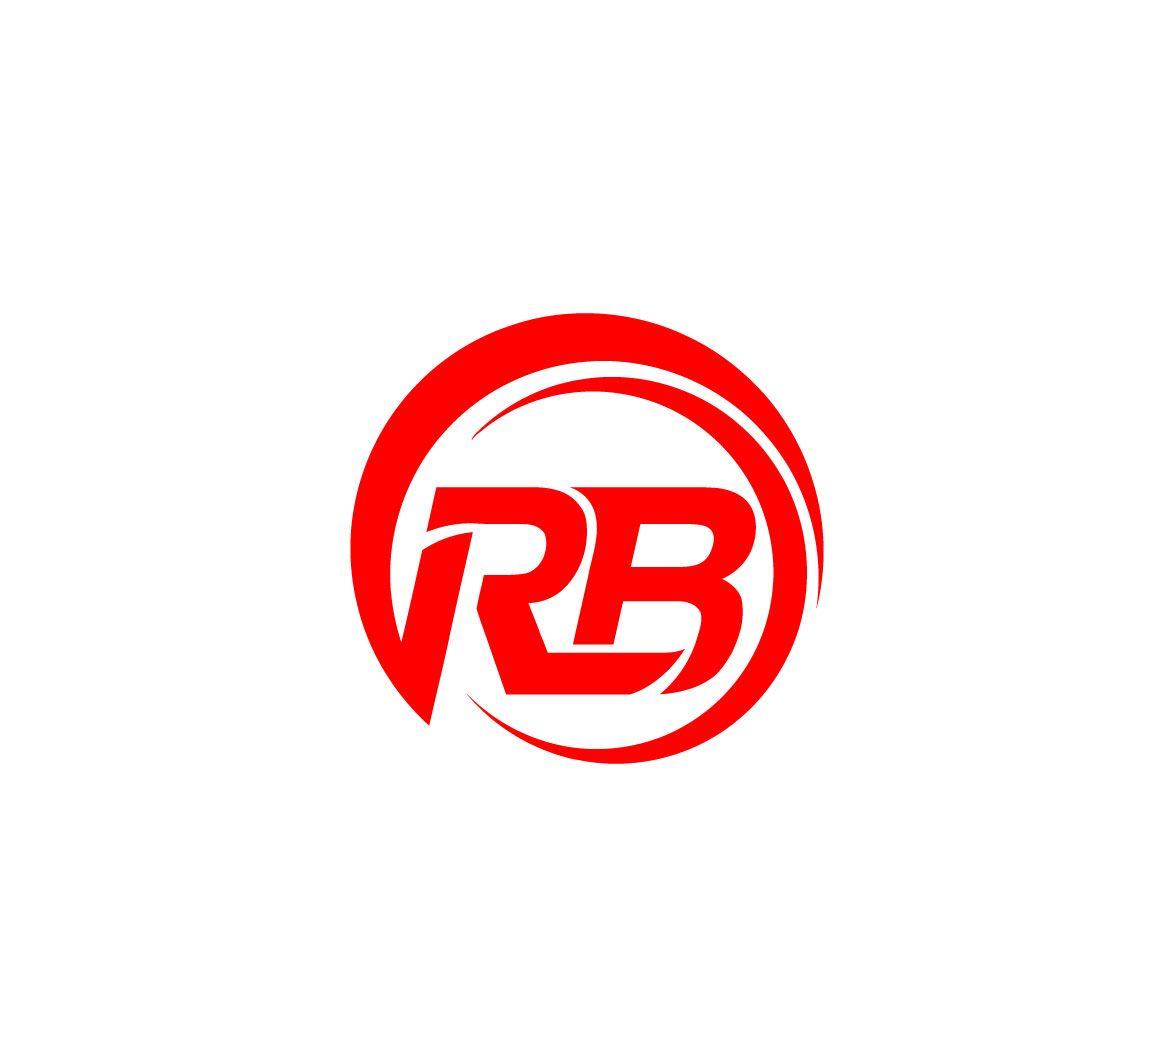 Circle R B Logo - Conservative, Modern, Fashion Logo Design for RB by Design expert ...